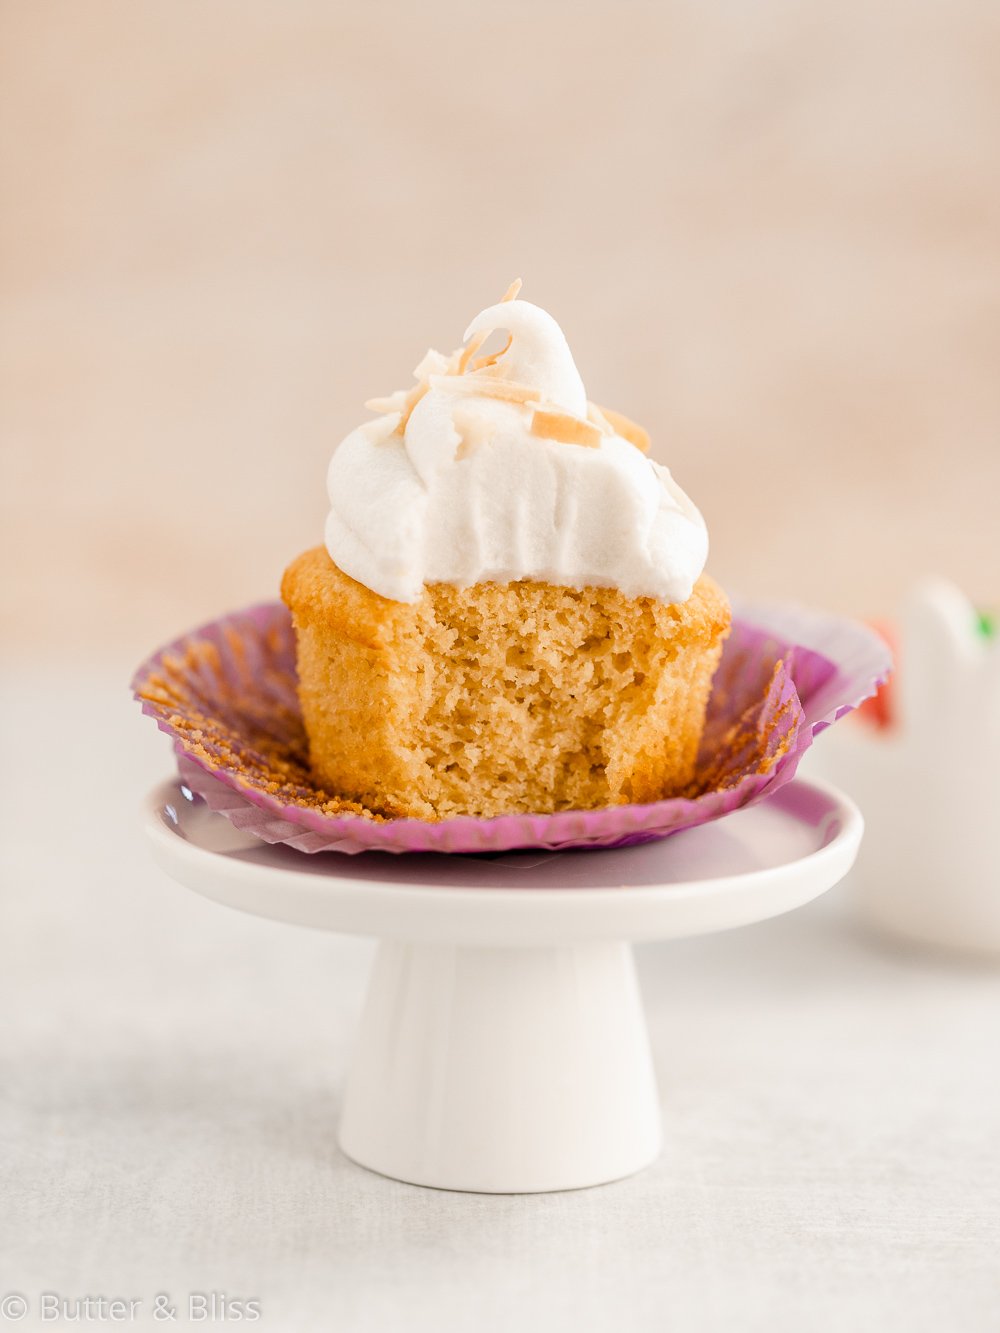 Gluten free vanilla cupcake with a bite